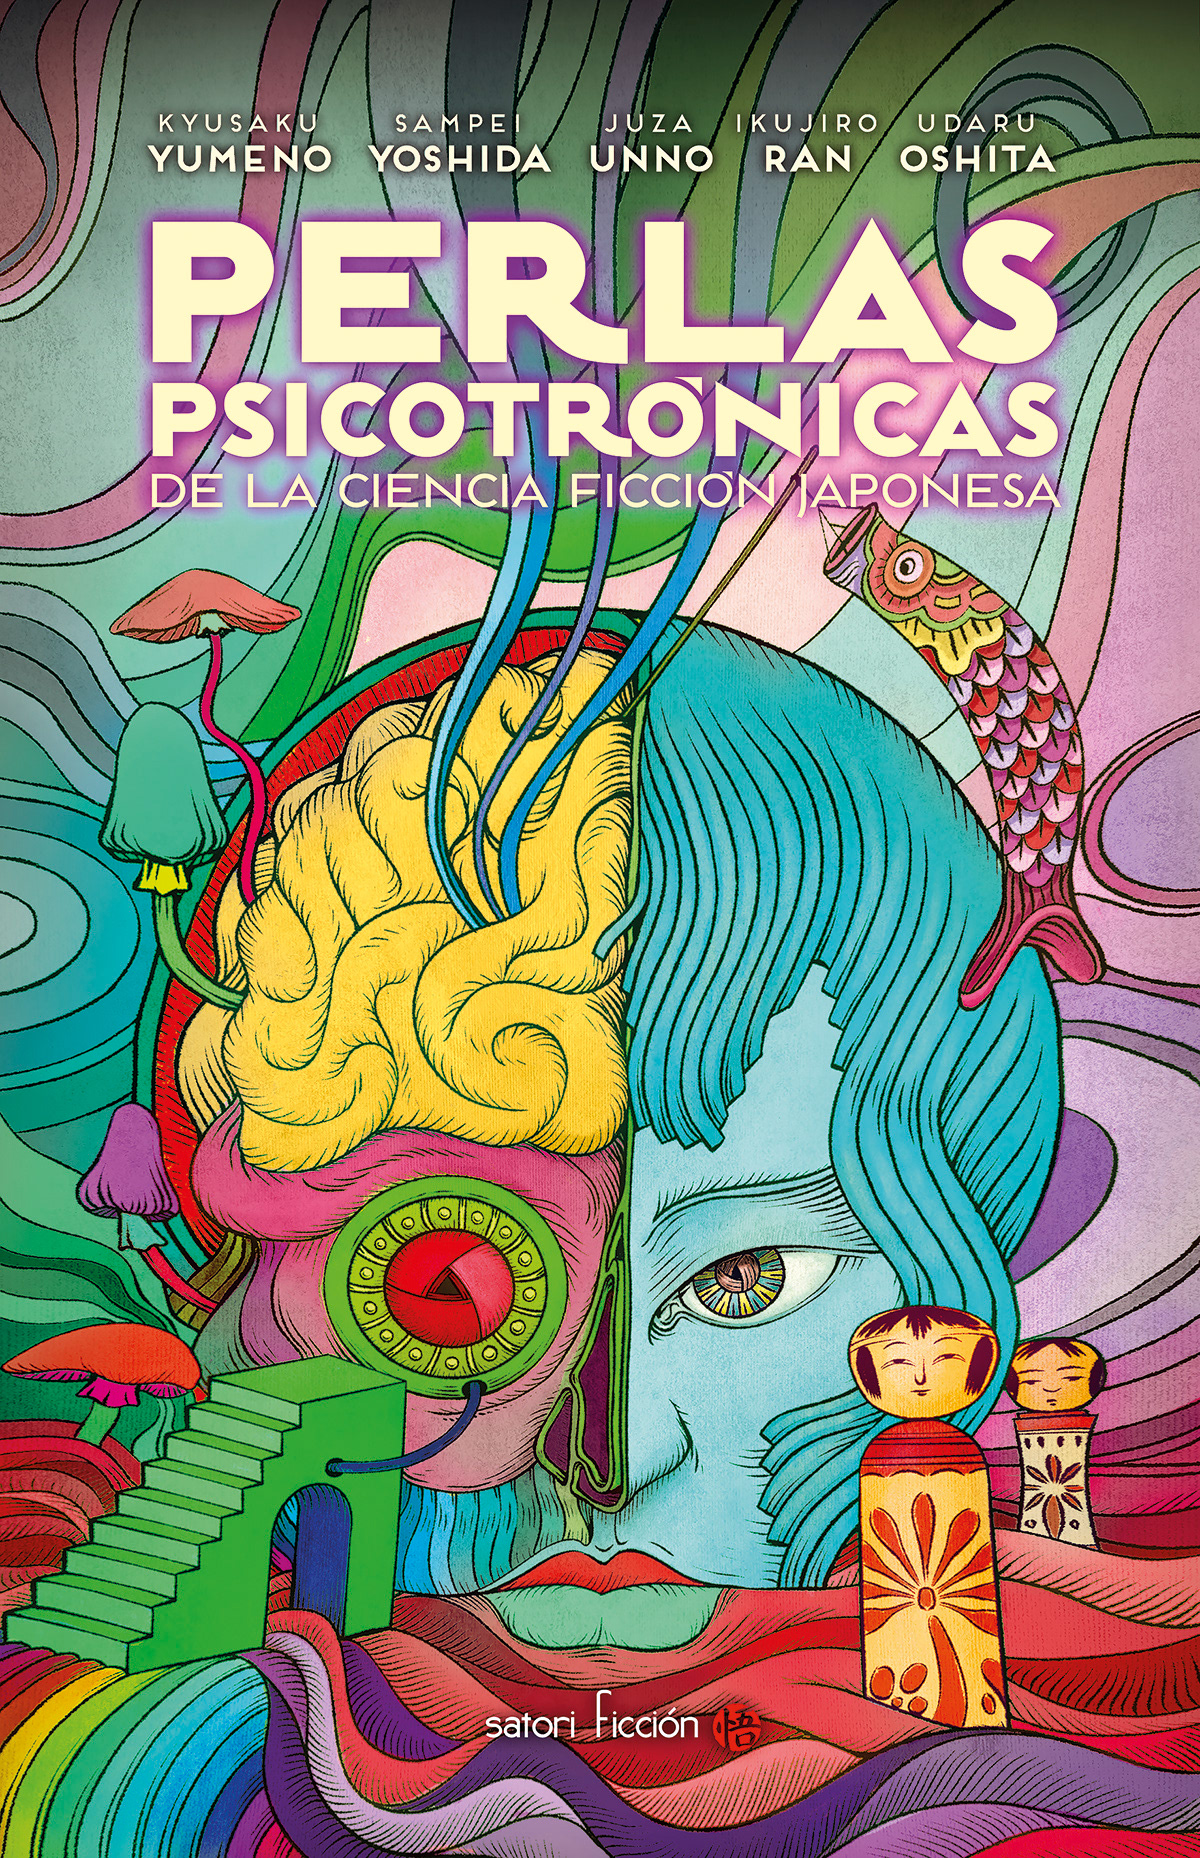 japanese Scifi book cover book design psychedelic pulp Retro vintage